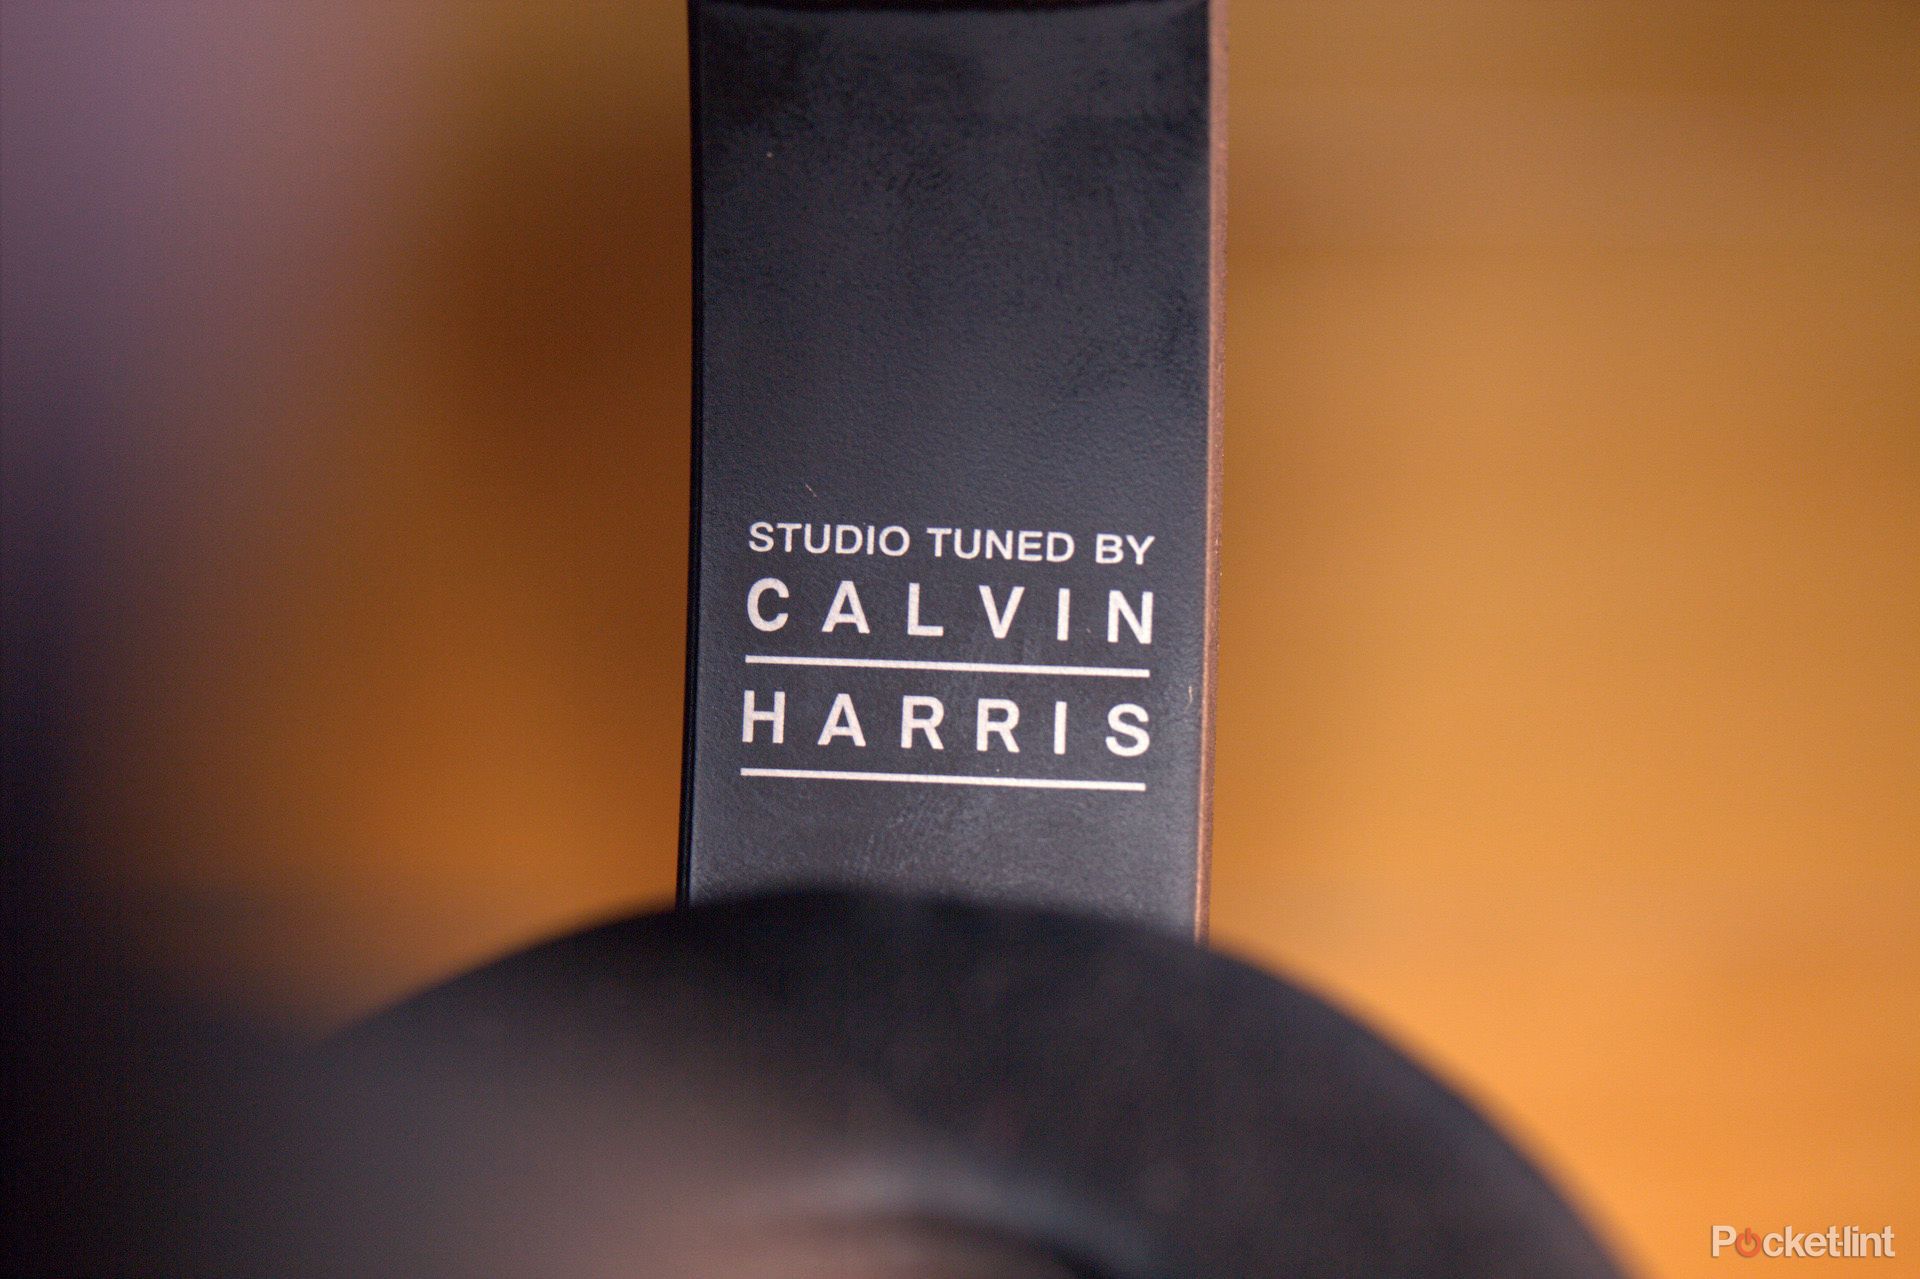 sol republic master tracks xc headphones studio tuned by calvin harris image 20